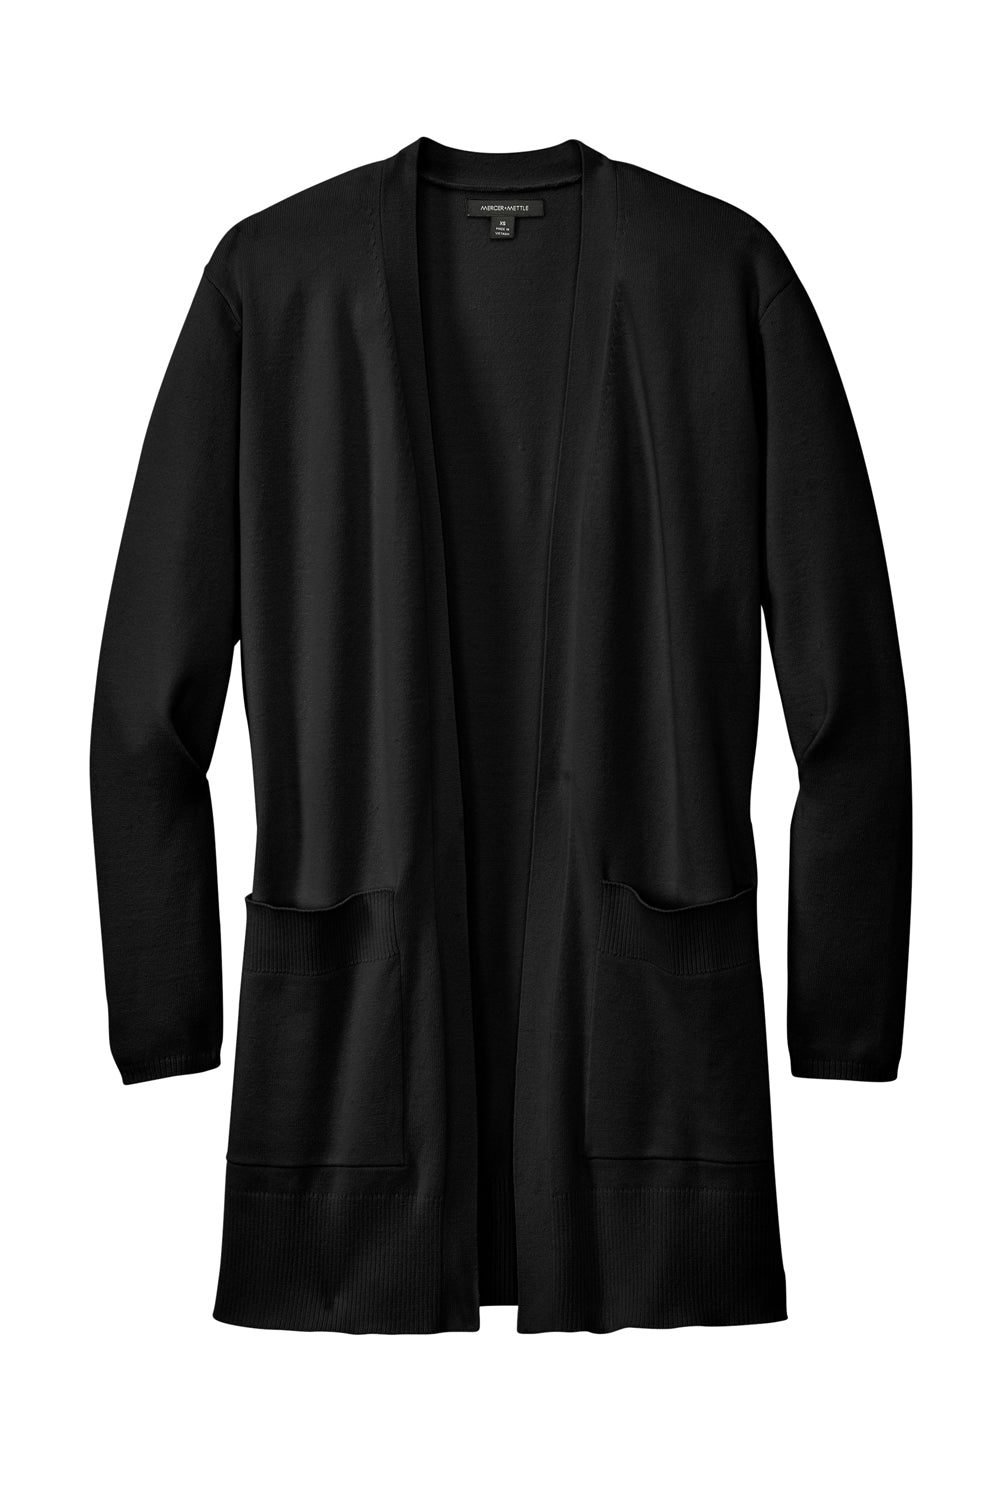 Mercer+Mettle MM3023 Womens Open Front Cardigan Sweater Deep Black Flat Front